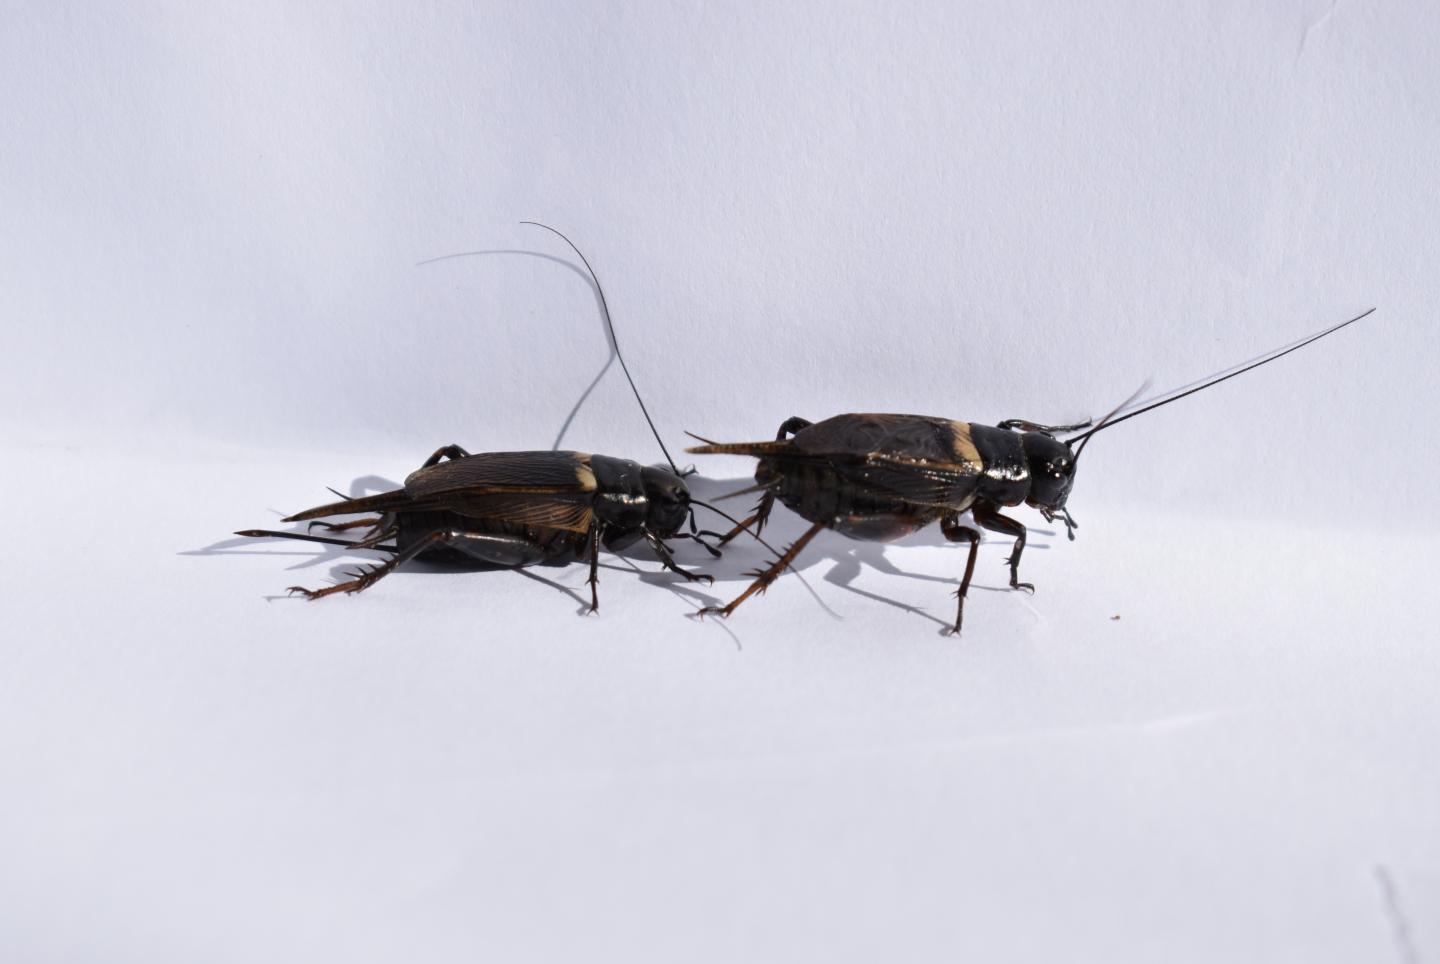 Female cricket (Gryllus bimaculatus) approaching male